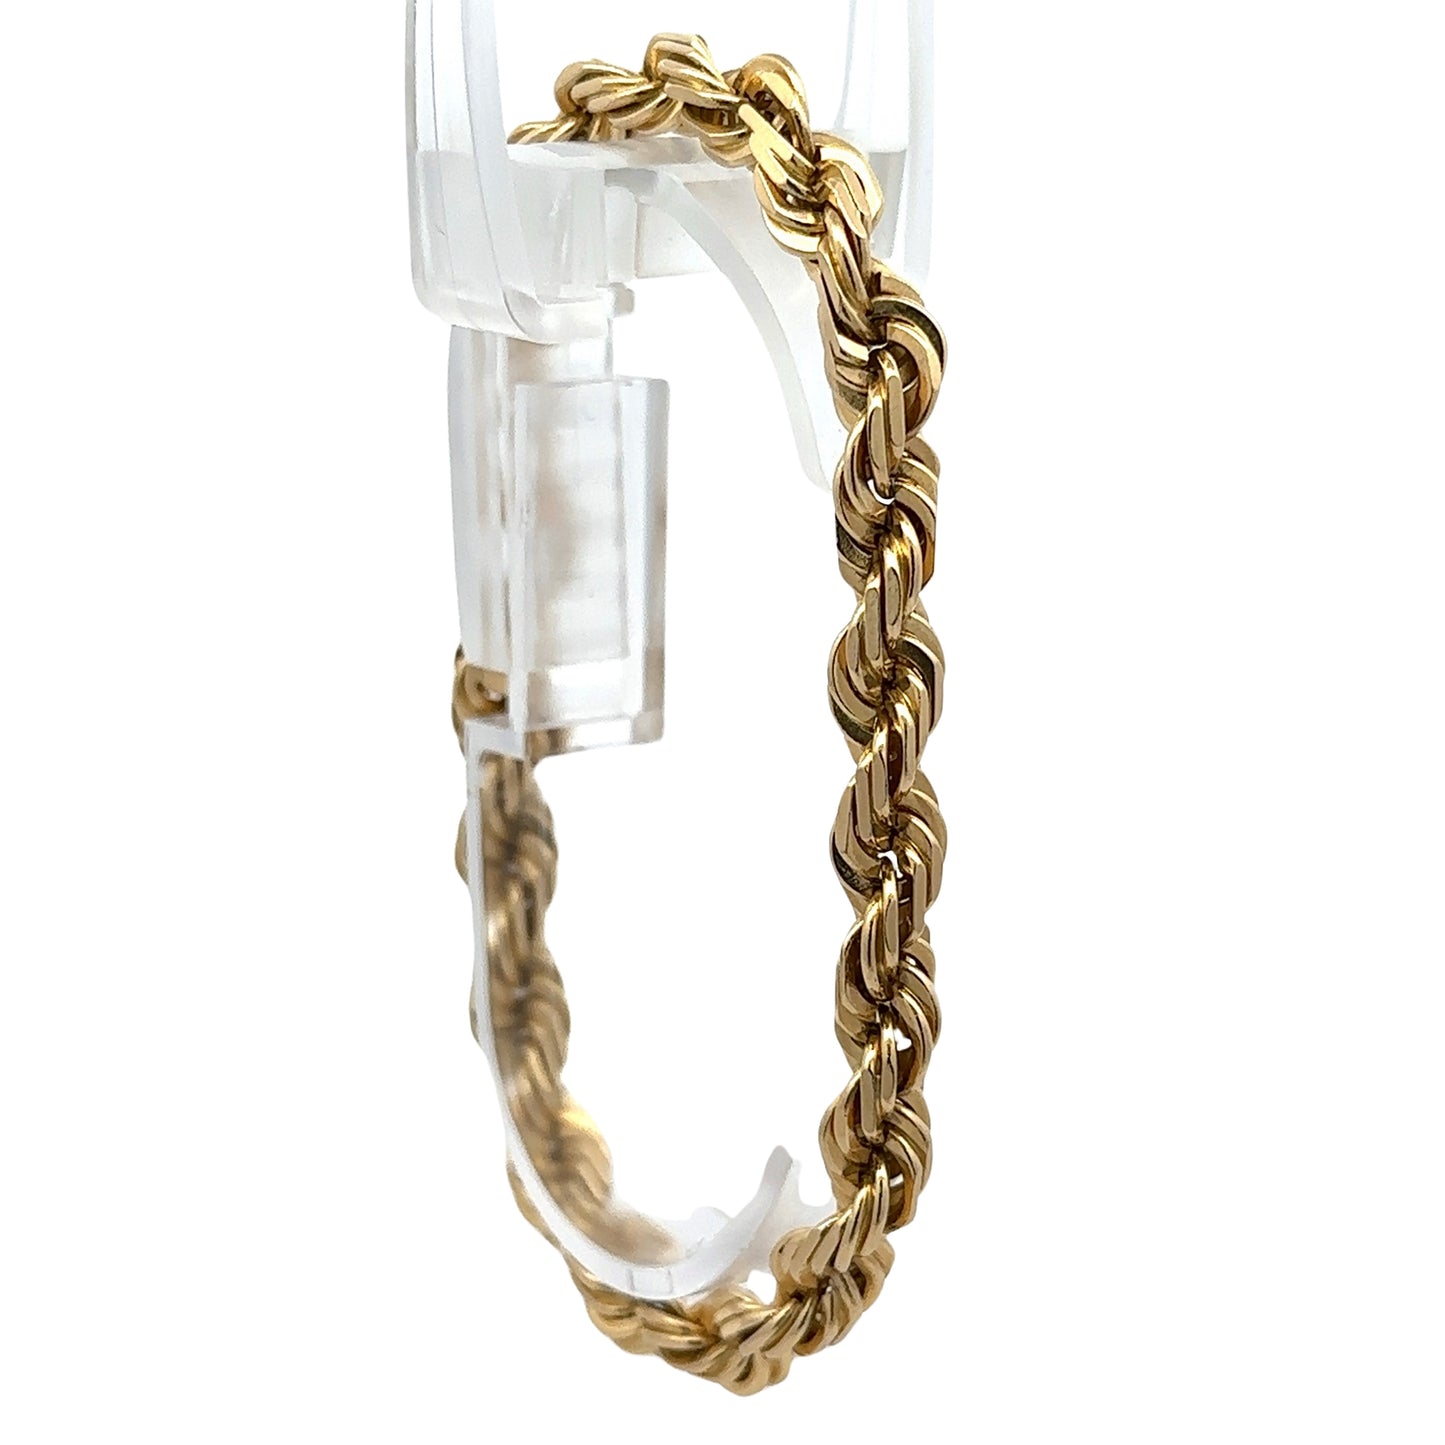 Diagonal view of yellow gold rope bracelet